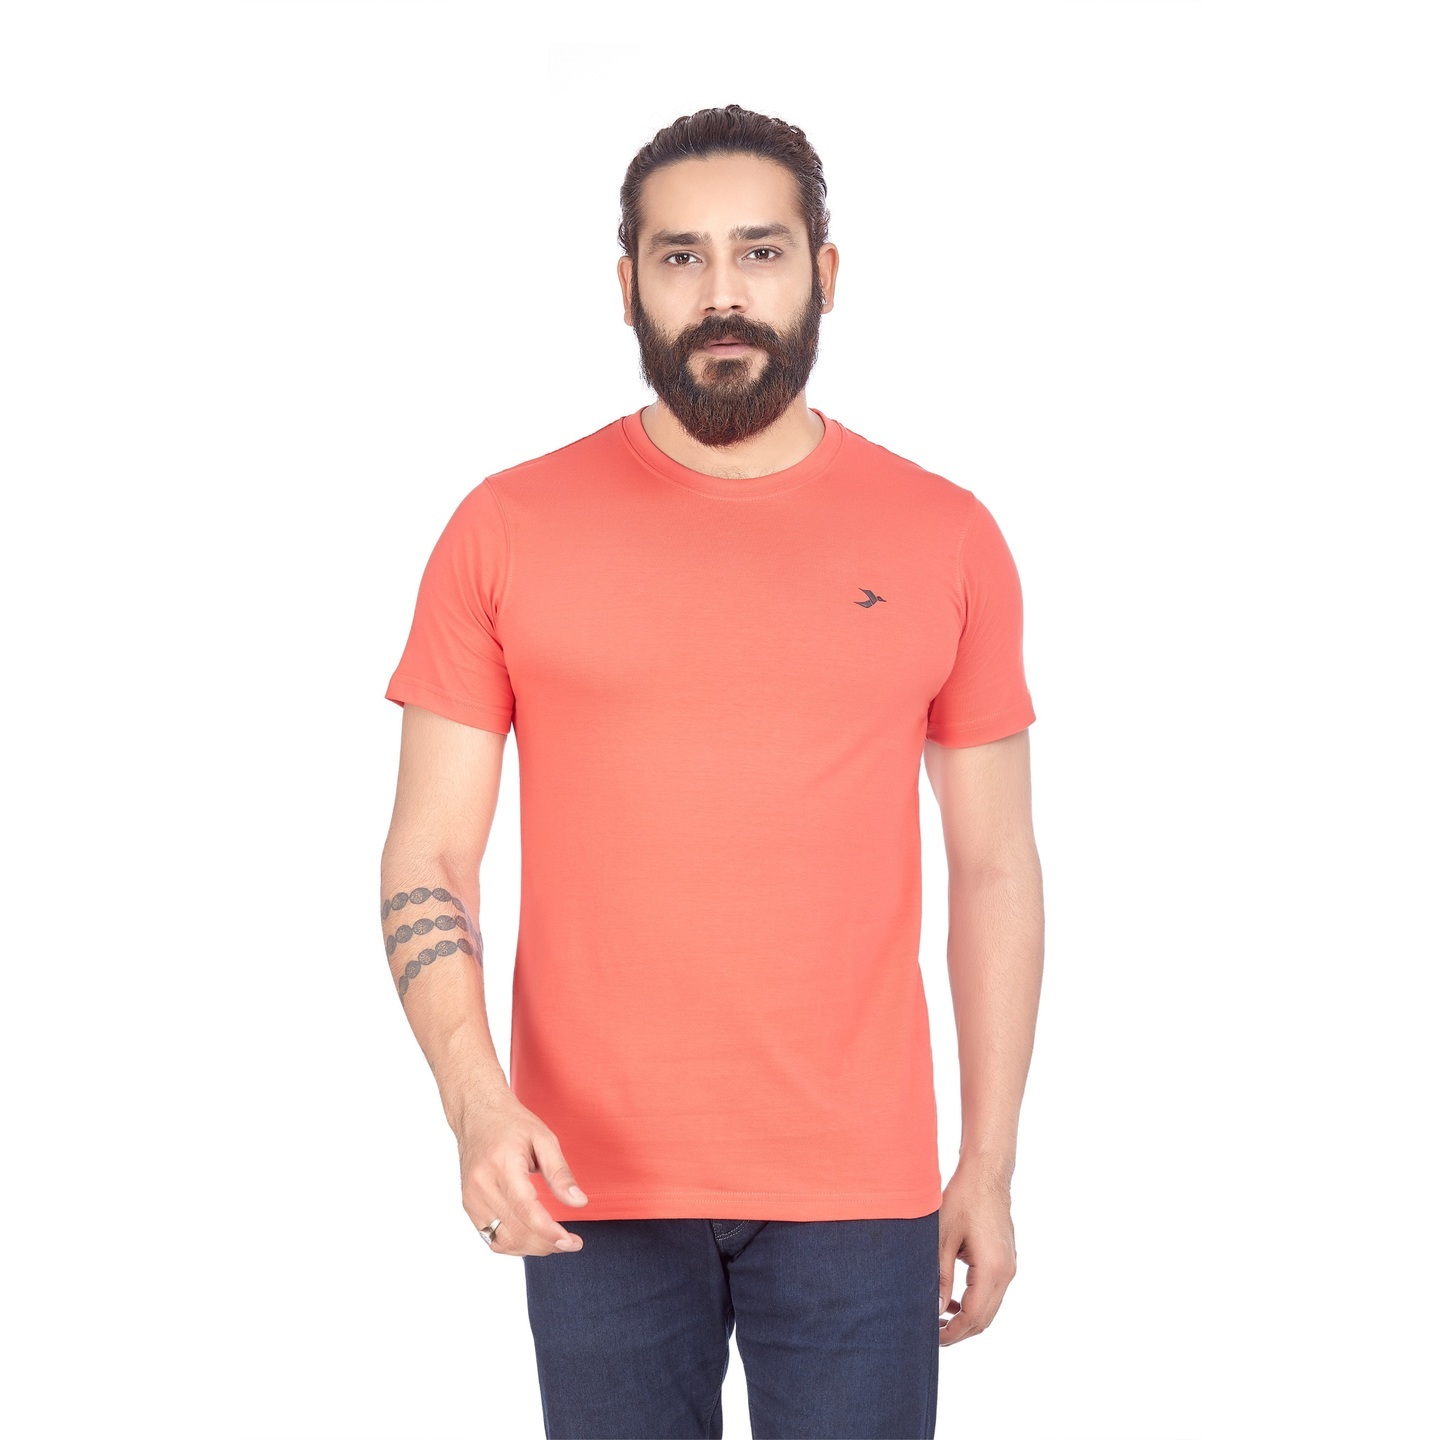 Men's Round Neck T-Shirt- Tomato